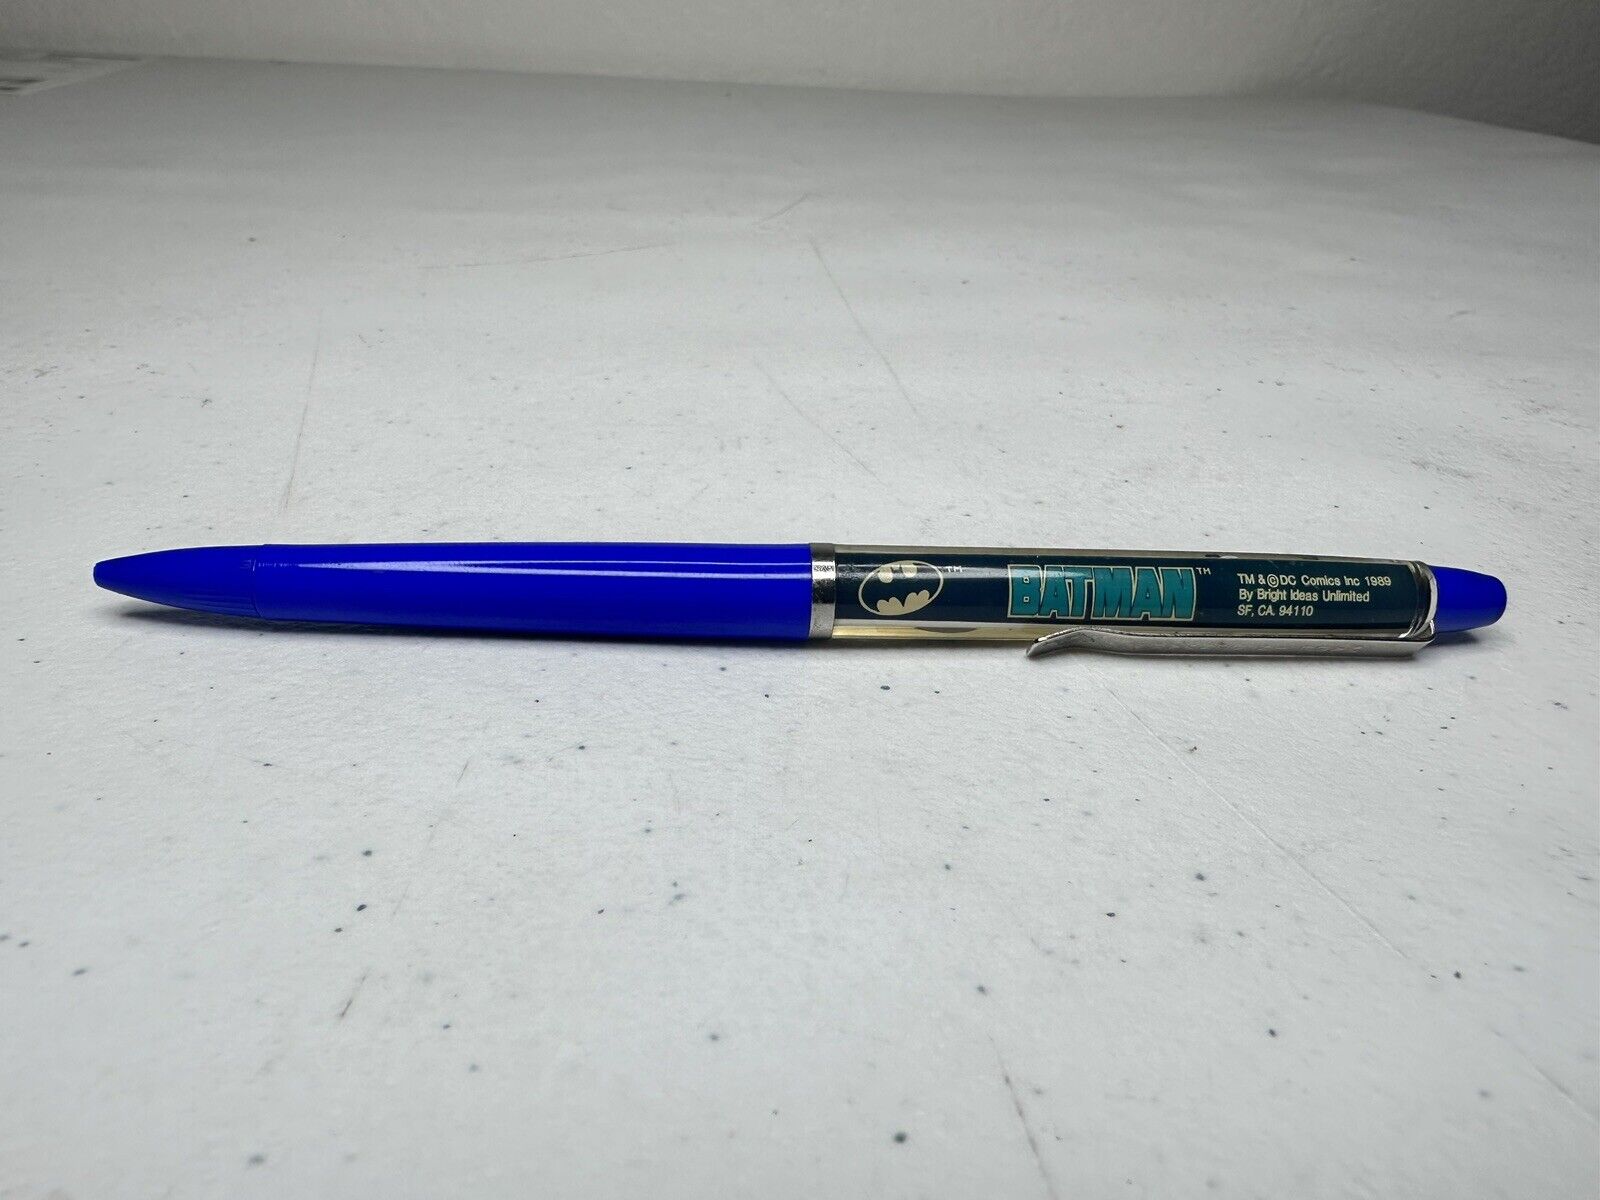 Rare 1989 Blue Batman Floating Action Pen - Denmark Edition - Batmobile Imagery